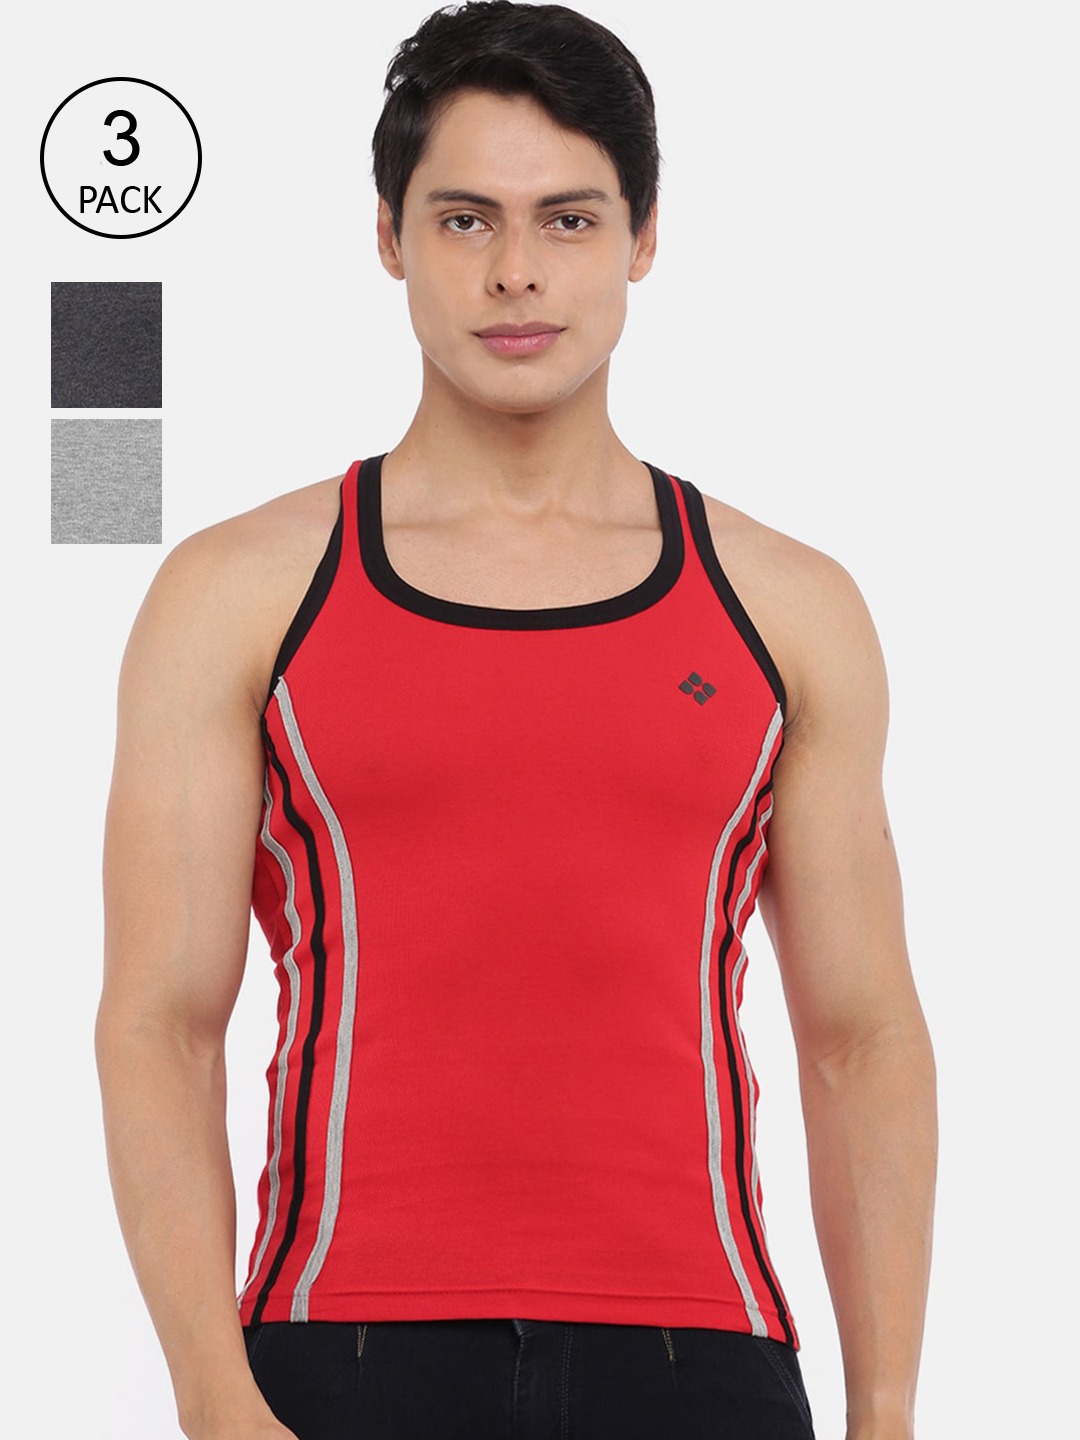 Clothing Innerwear Vests | Dollar Bigboss Men Pack Of 3 Assorted Innerwear Gym Vest MBB-14-PO3-CO1 - QO03204